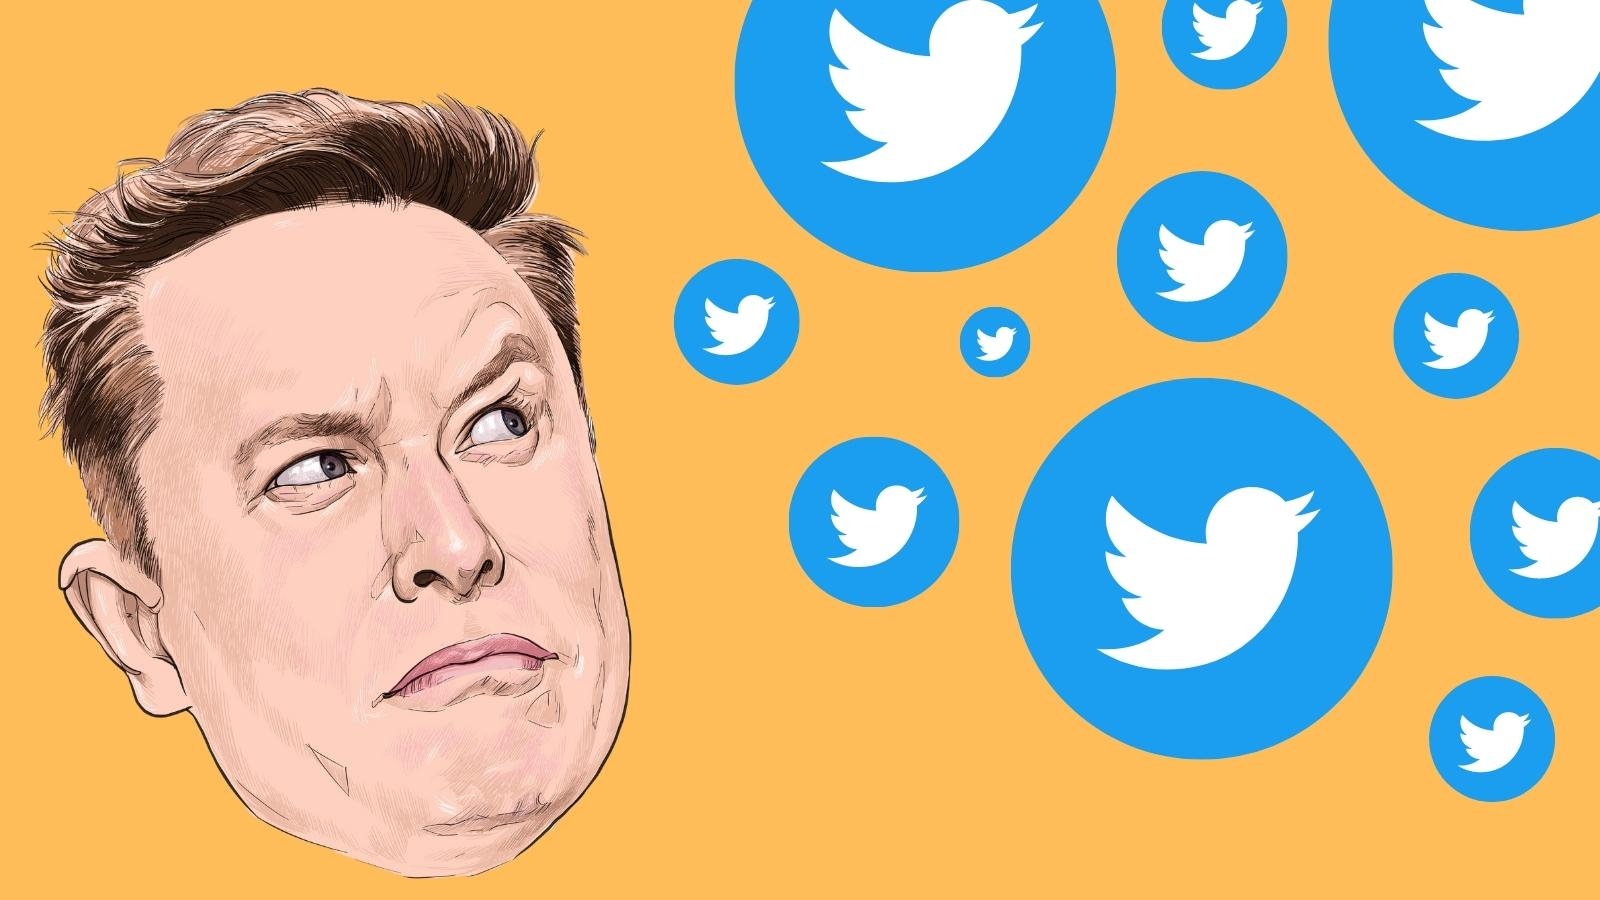 Live blog: Twitter chaos – Elon Musk set to purge 1.5b accounts